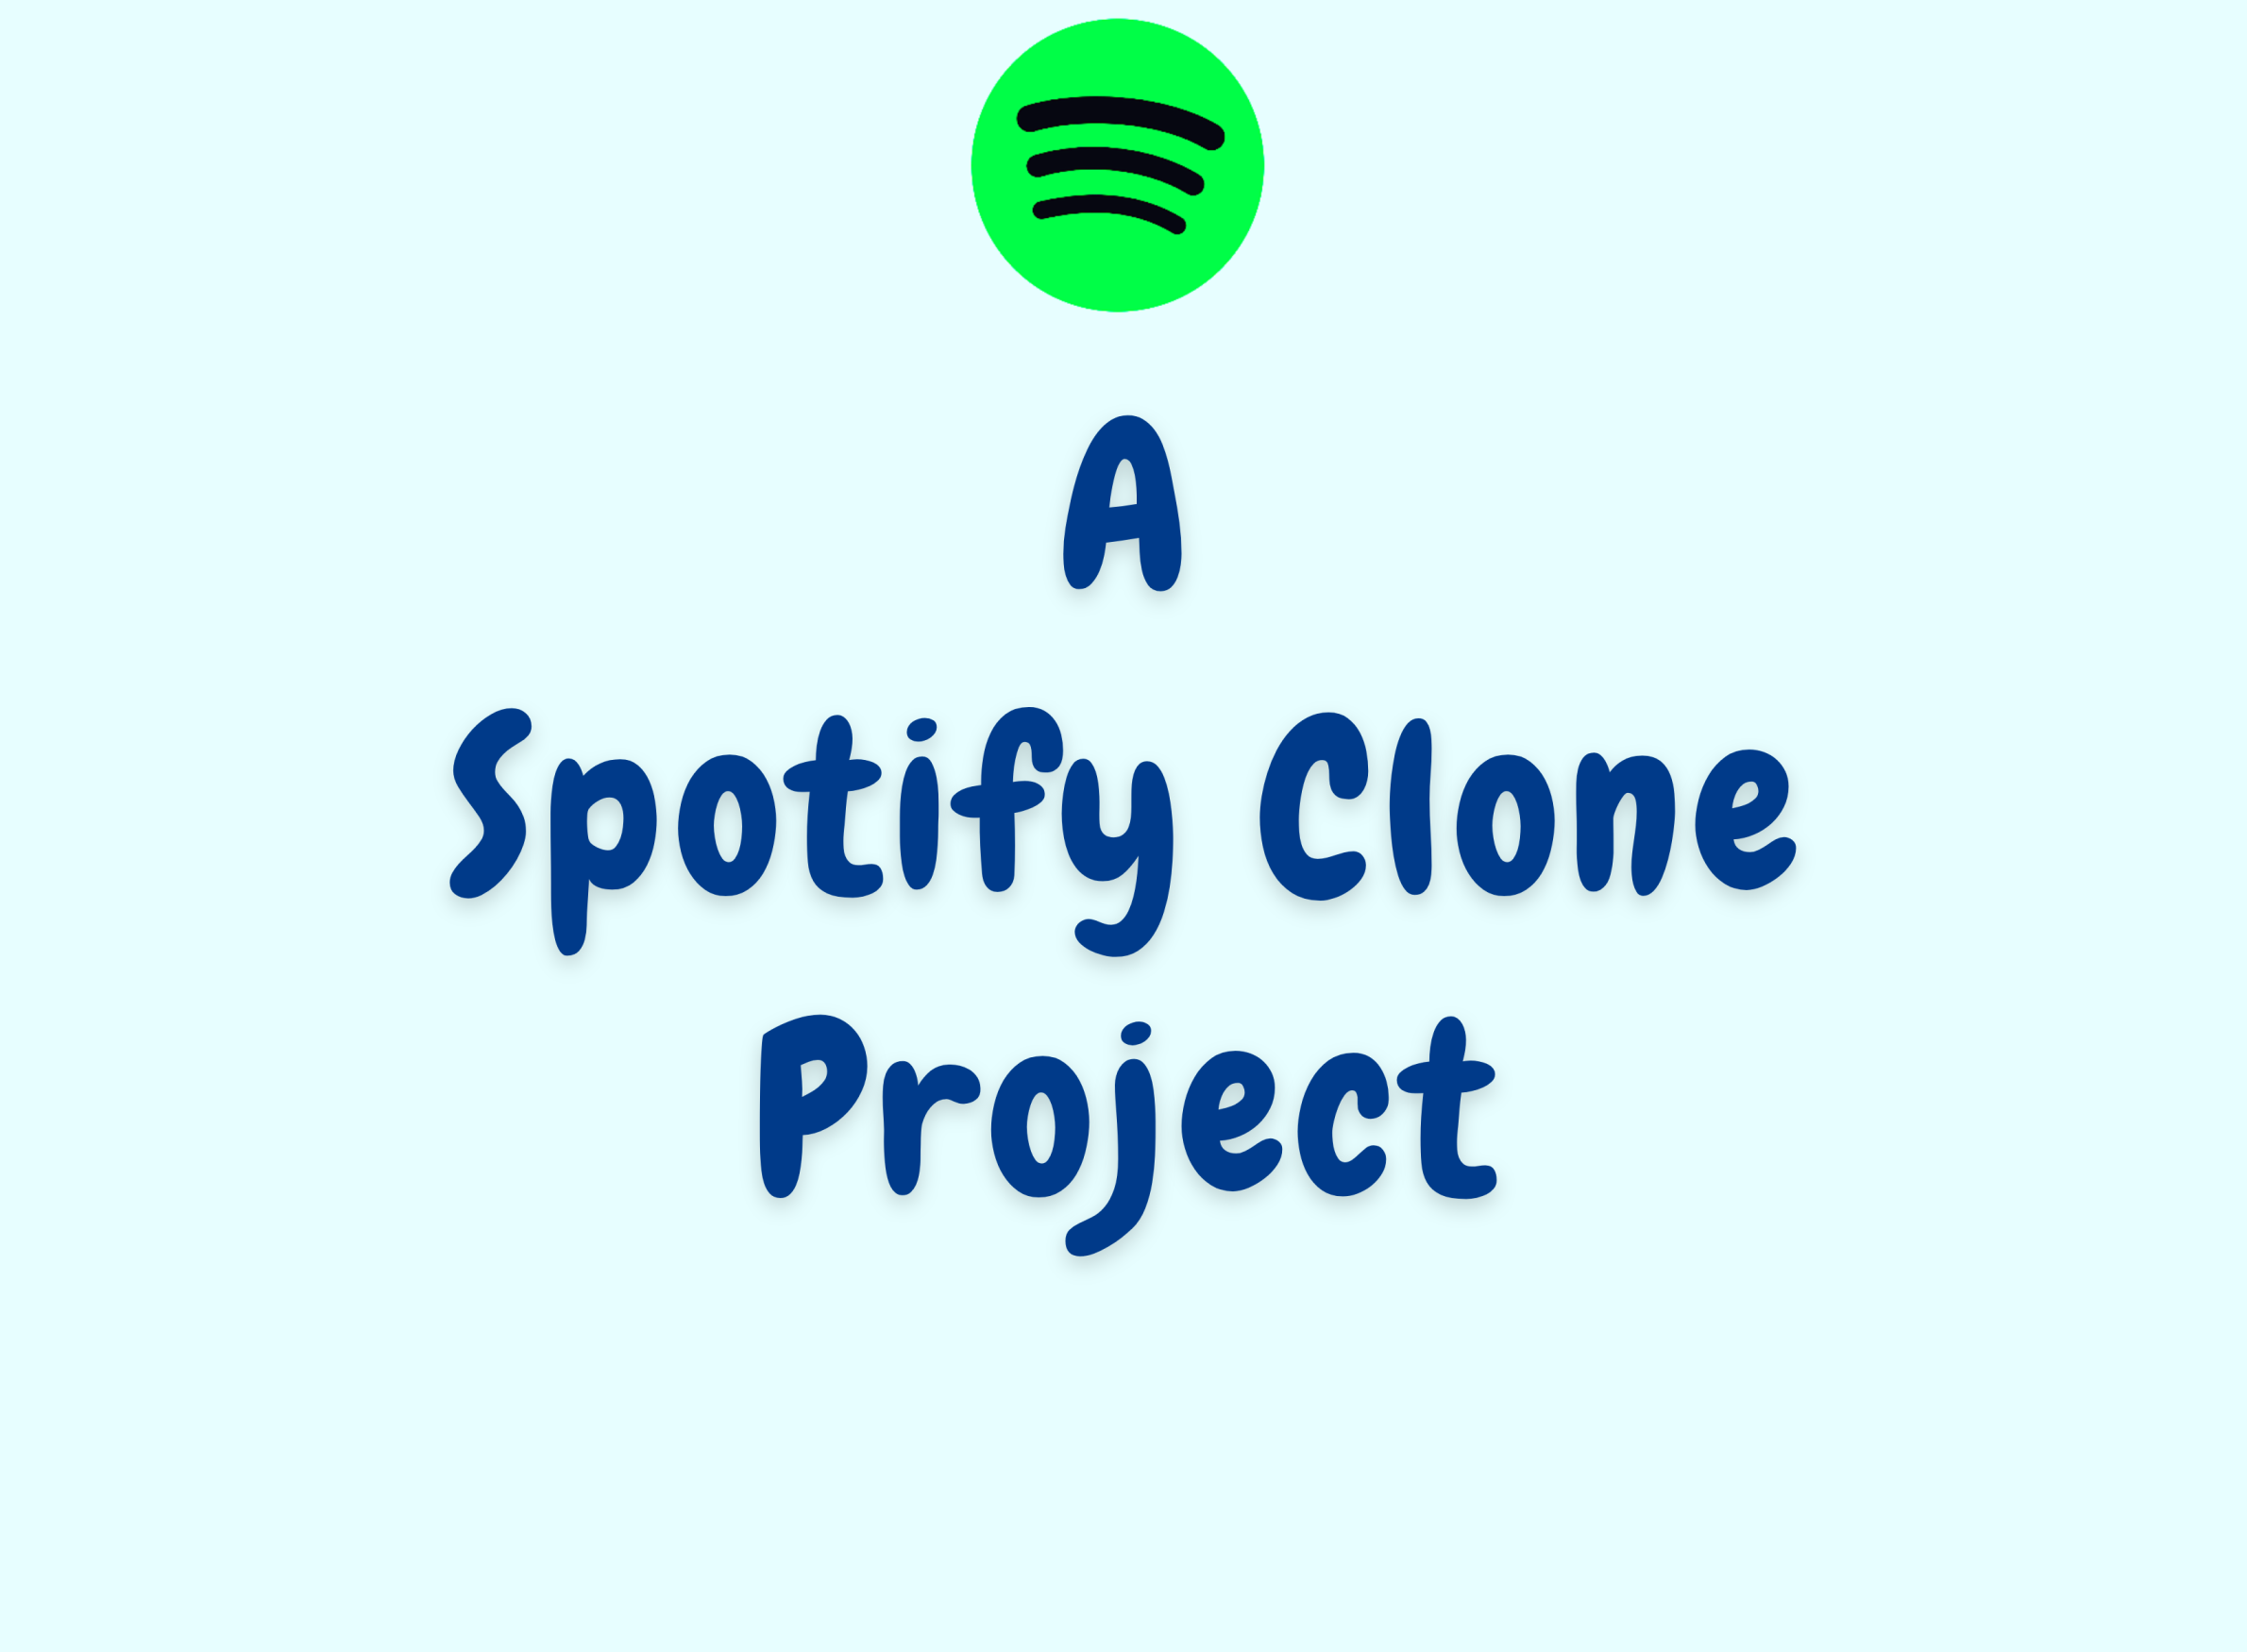 Spotify Clone Project